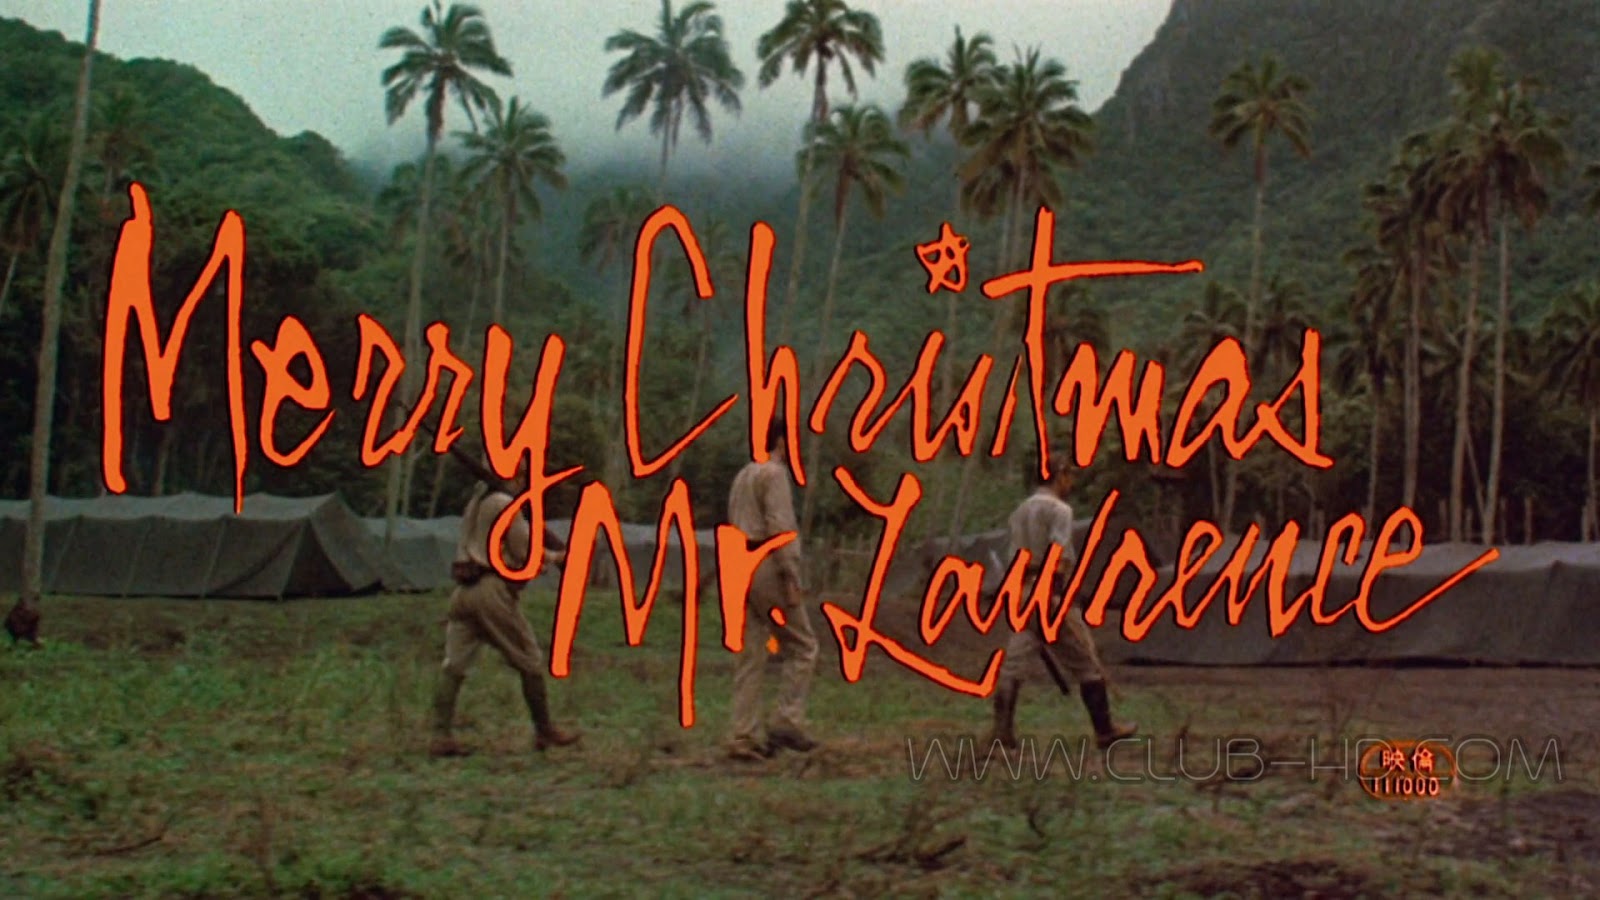 Merry-Christmas-Mr-Lawrence-CAPTURA-1.jpg